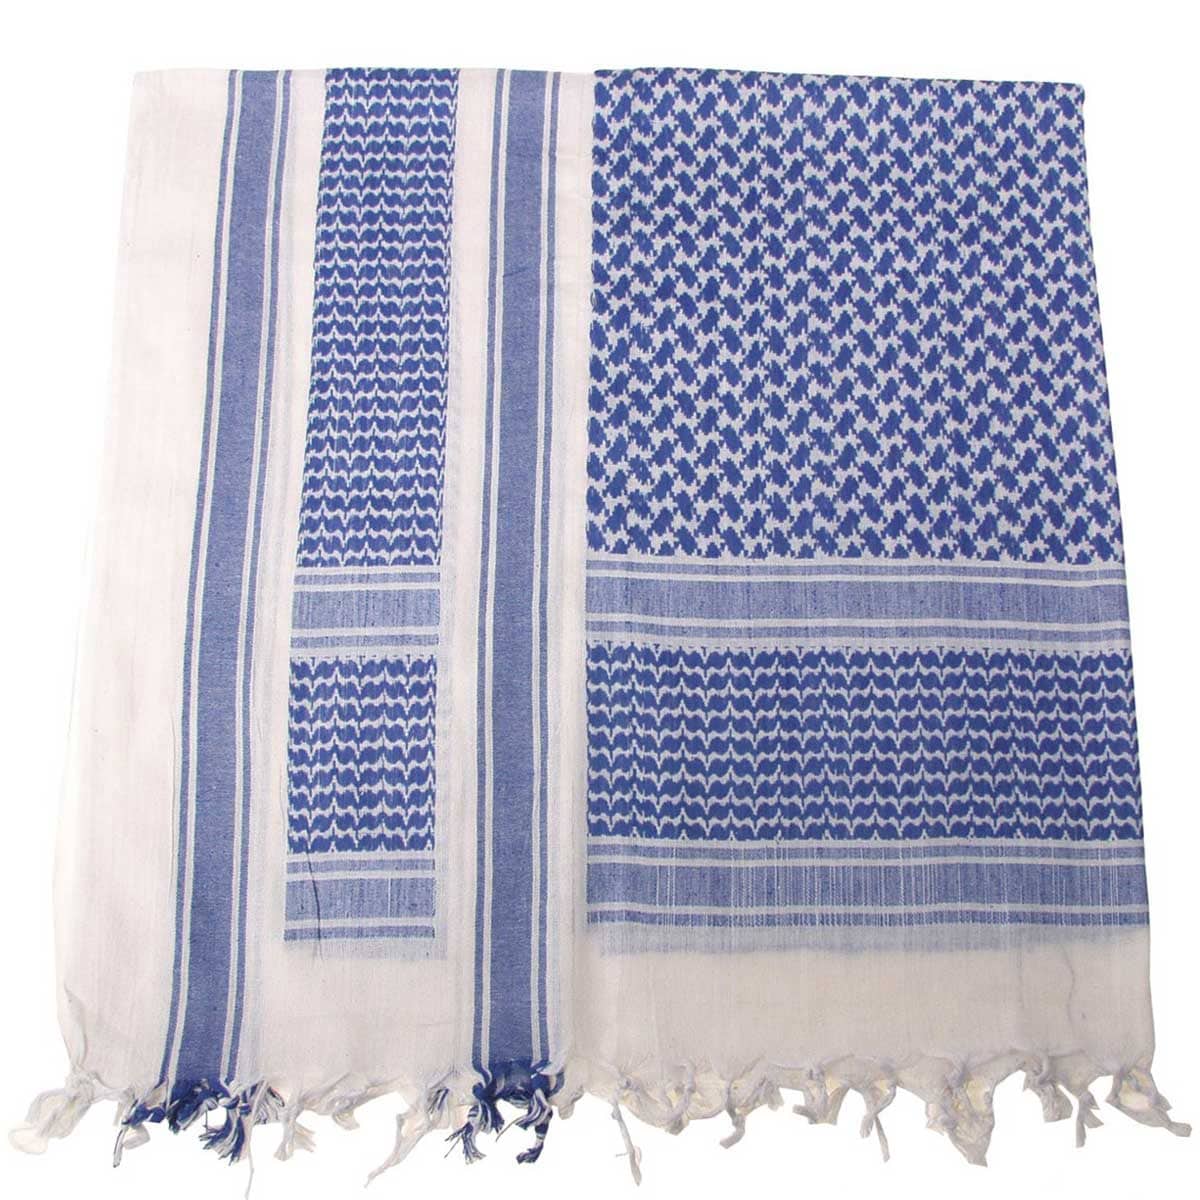 Arafatka chusta ochronna MFH Shemagh - Blue/White